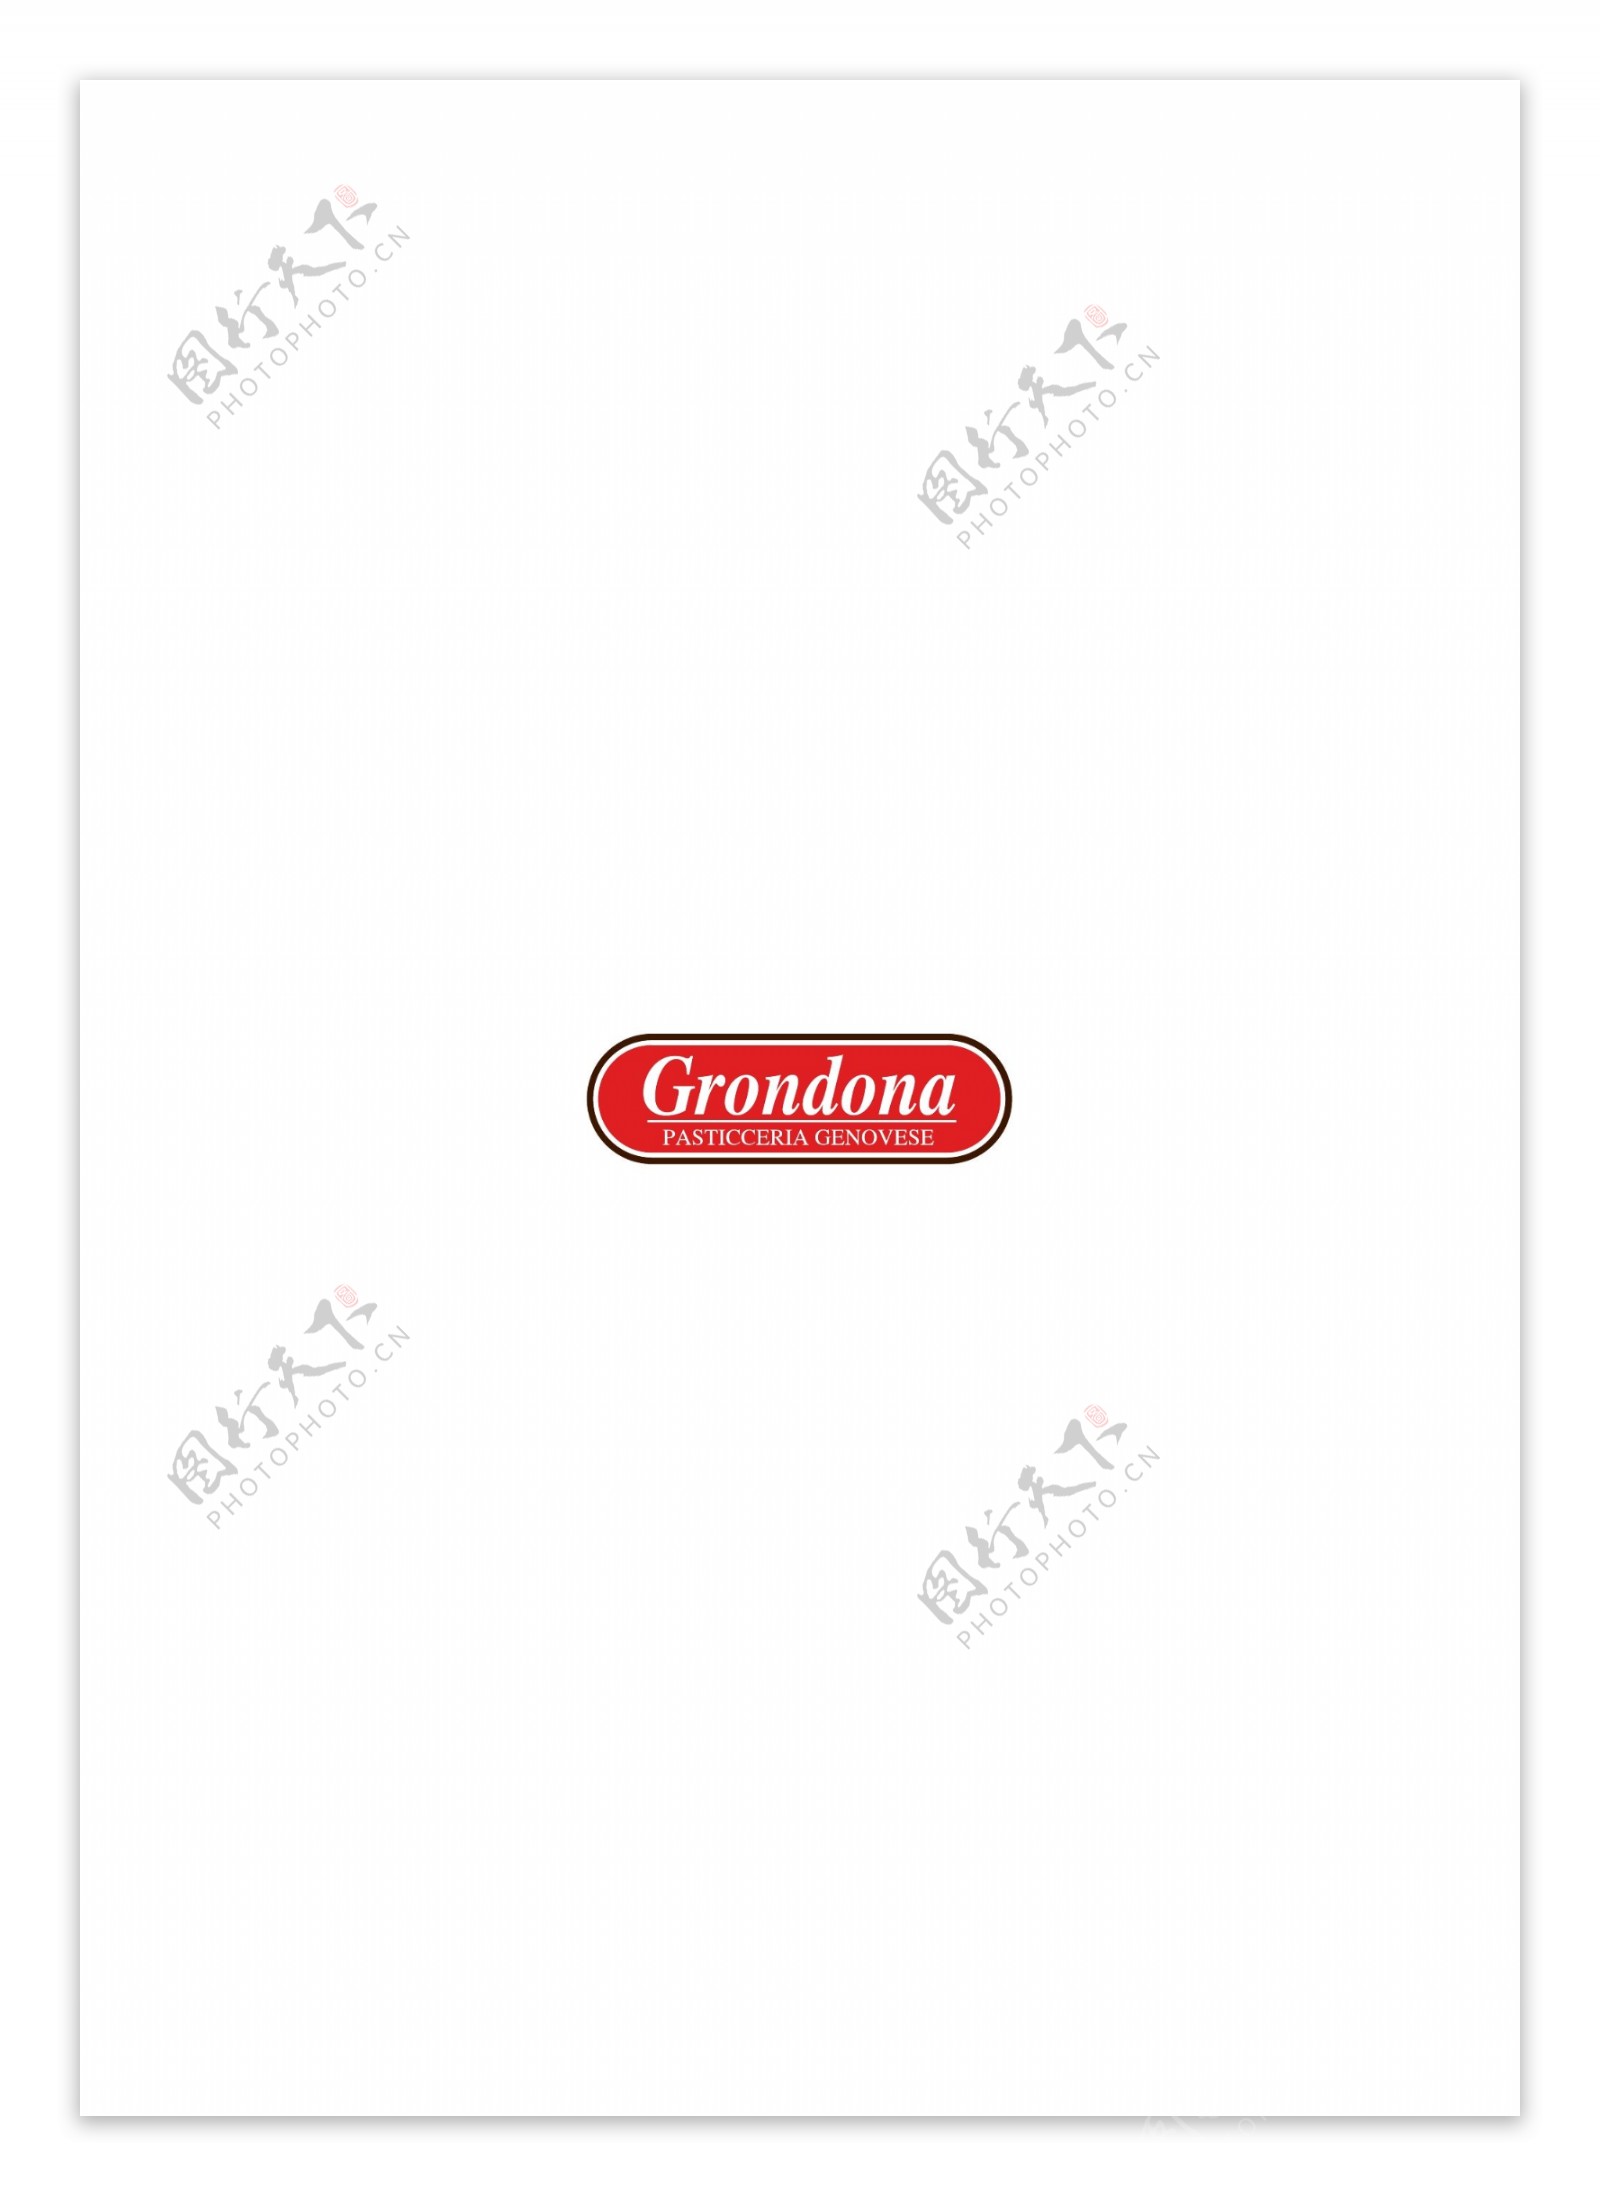 Grondonalogo设计欣赏Grondona轻工标志下载标志设计欣赏